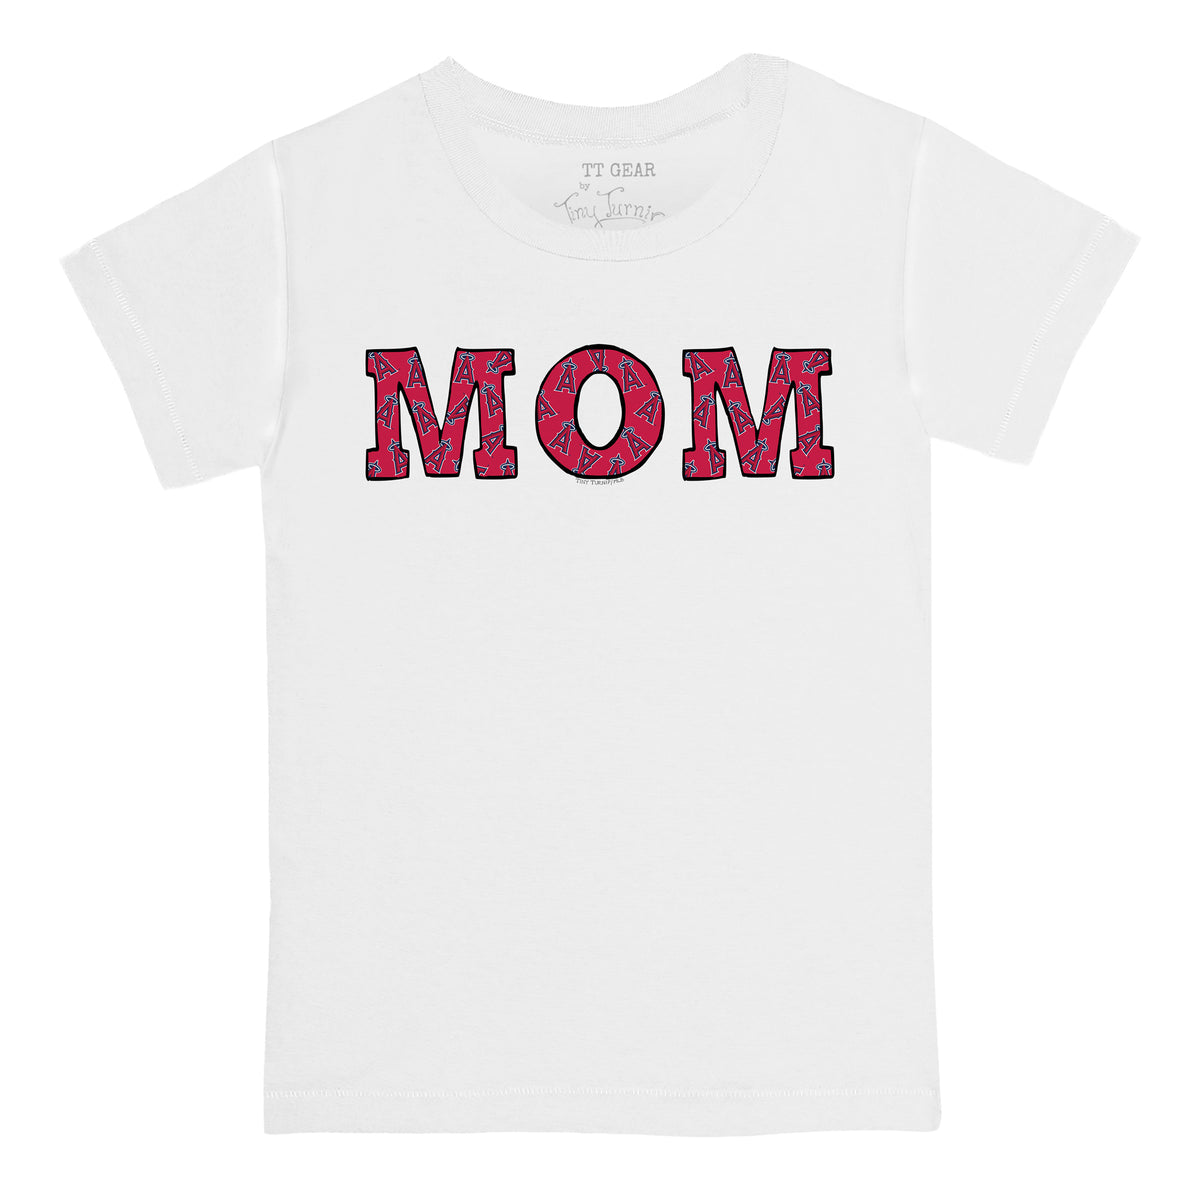 Los Angeles Angels Mom Tee Shirt